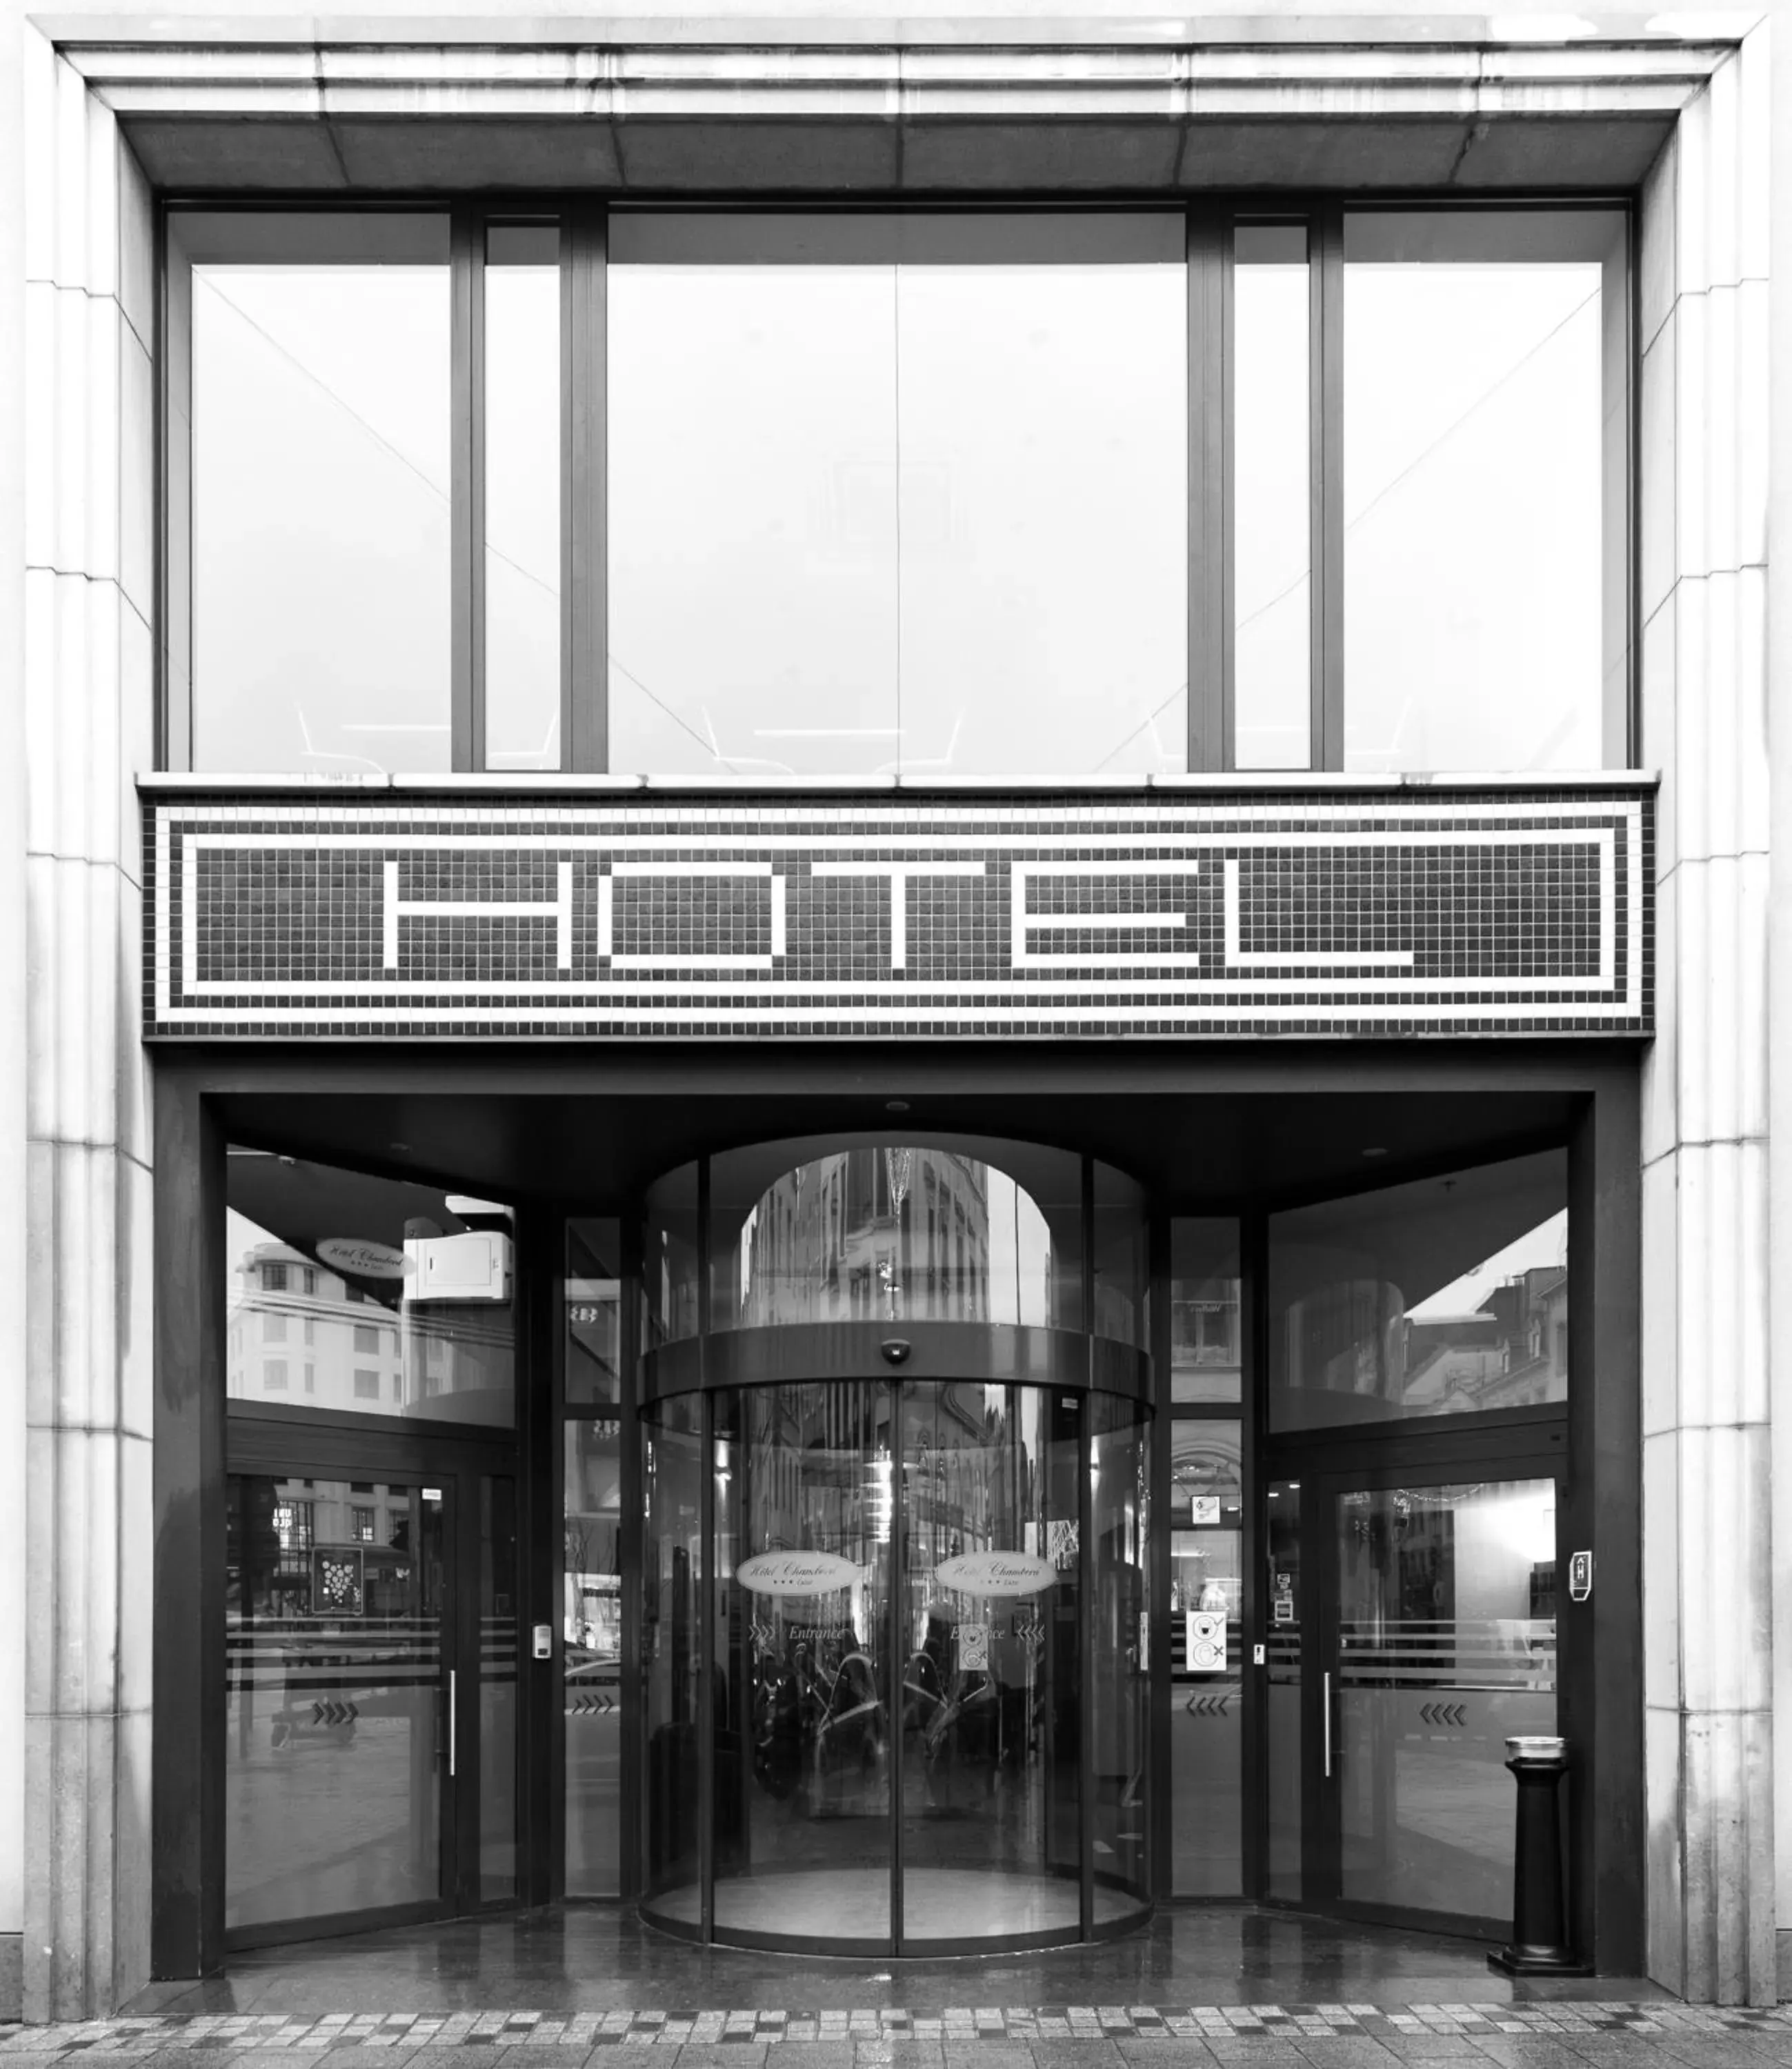 Facade/entrance in Hotel Chambord